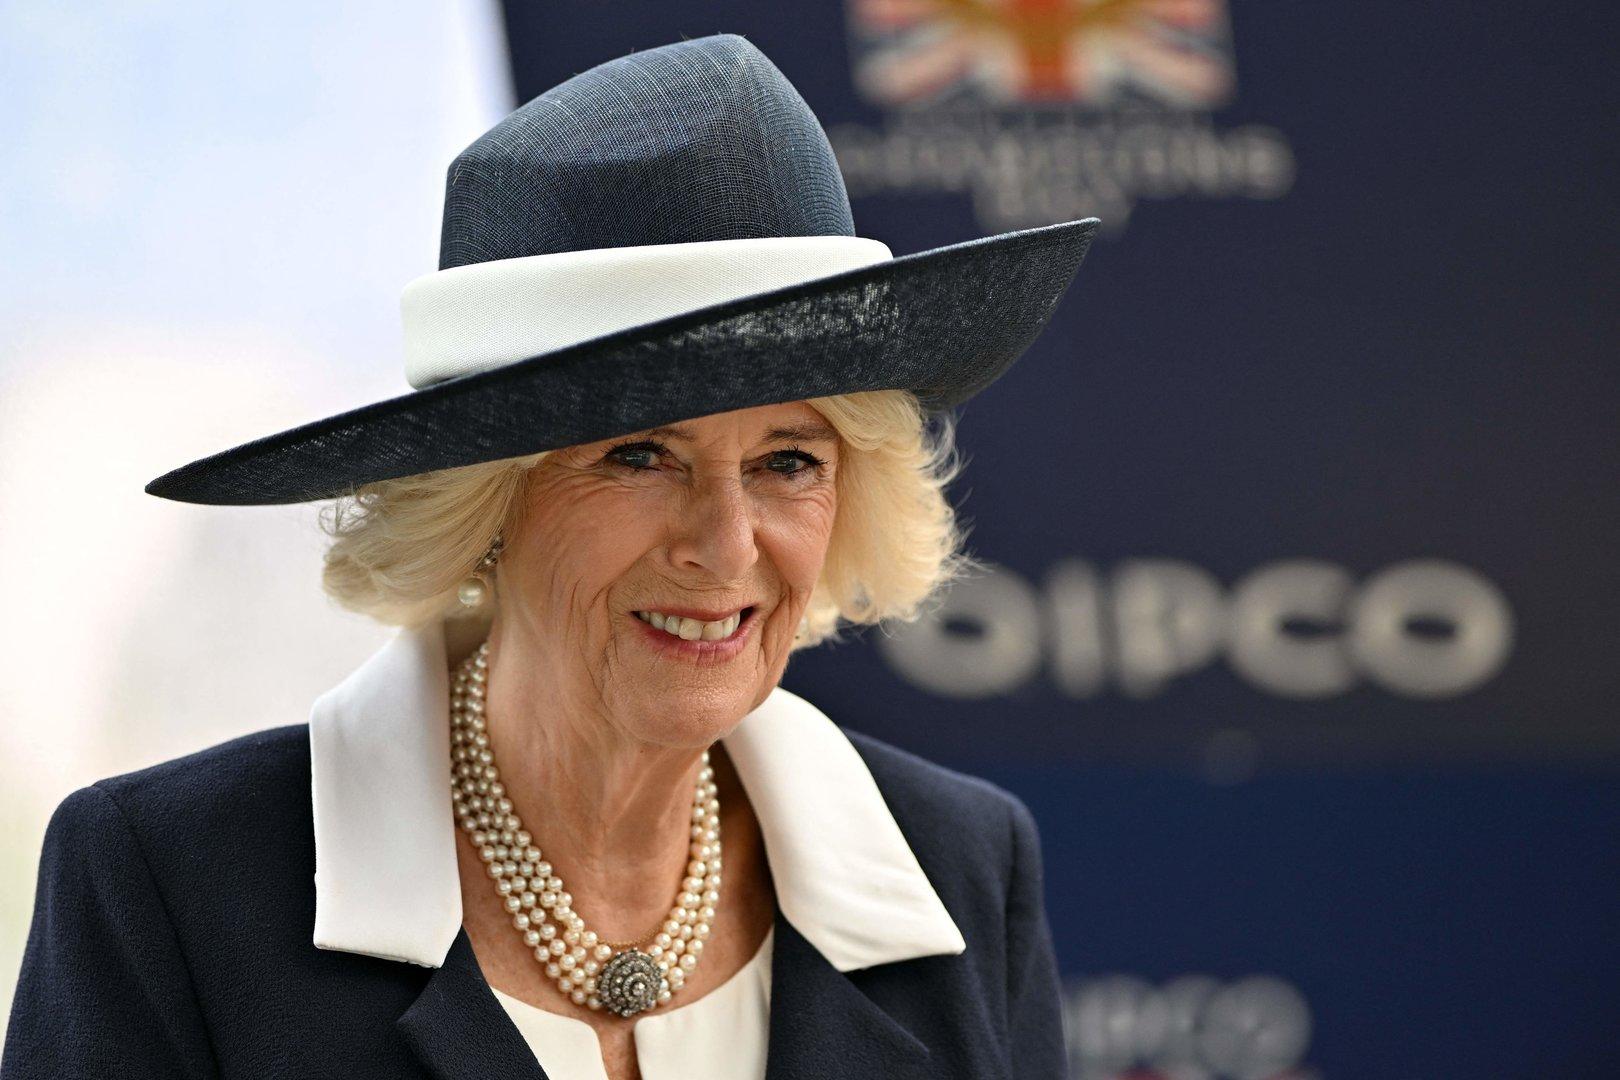 Berichte: Buckingham Palast will Camillas Titel ändern